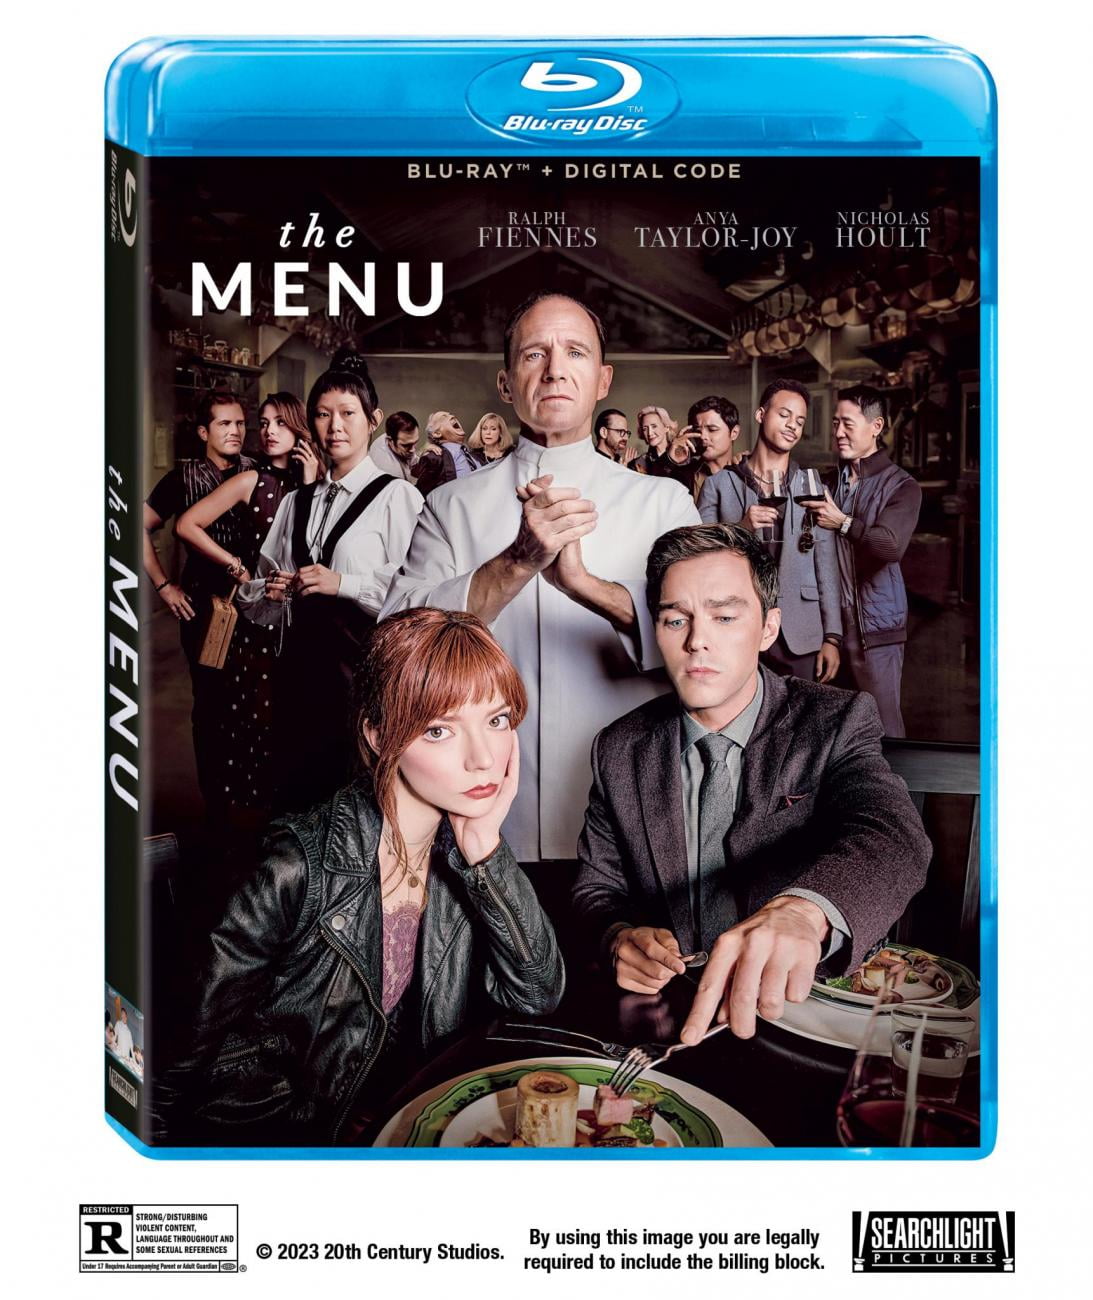 The Menu (Blu-Ray + Digital Code)